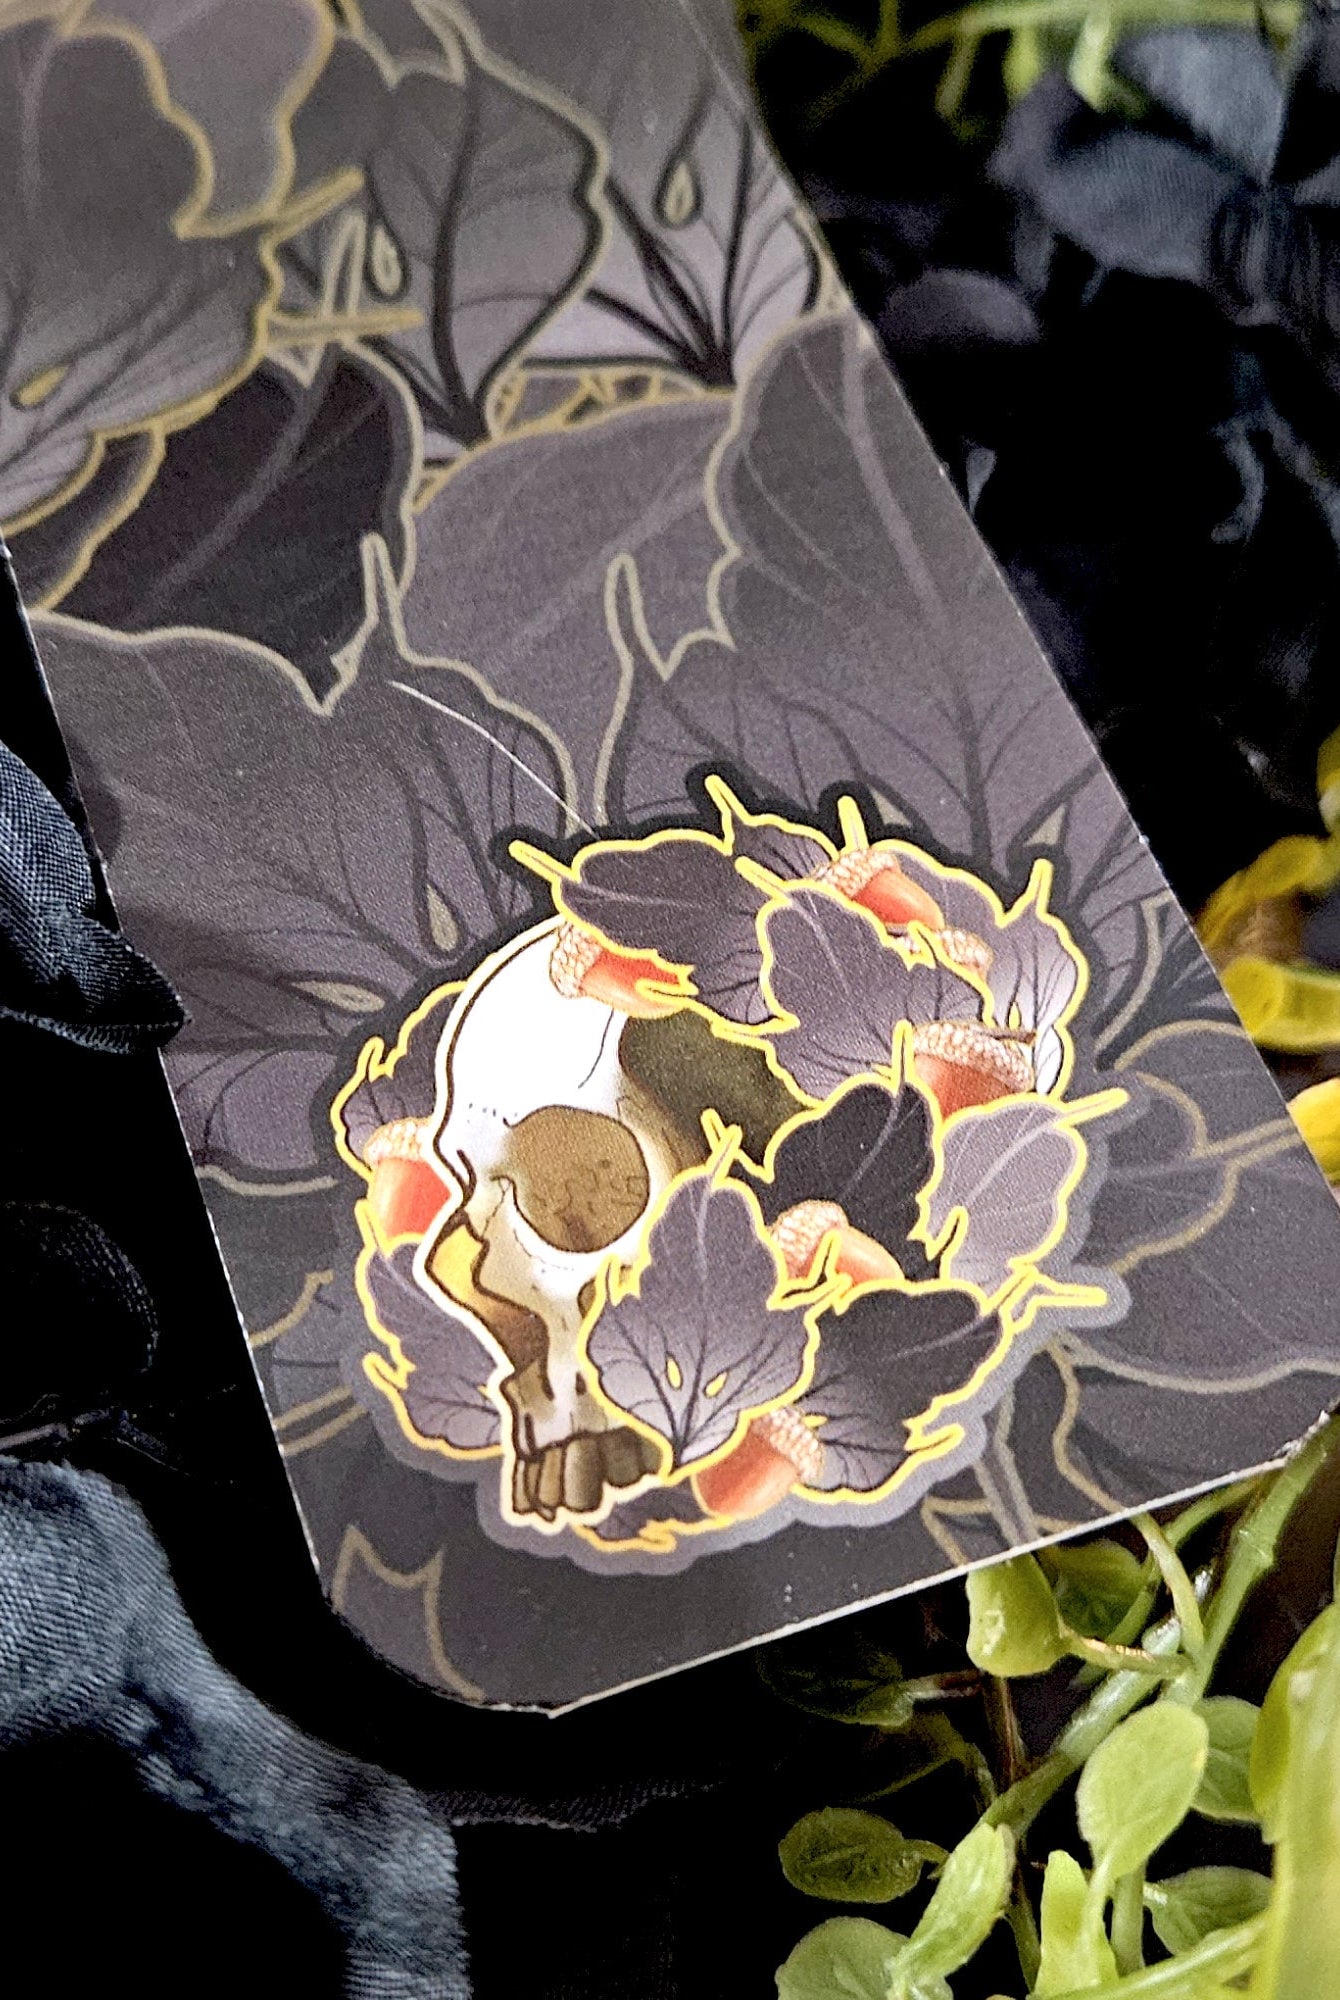 BOOKMARK: Skull with Acorns and Leaves , Acorn Skull Bookmark , Dark Aesthetic Skull and Leaves , Dark Art Bookmark